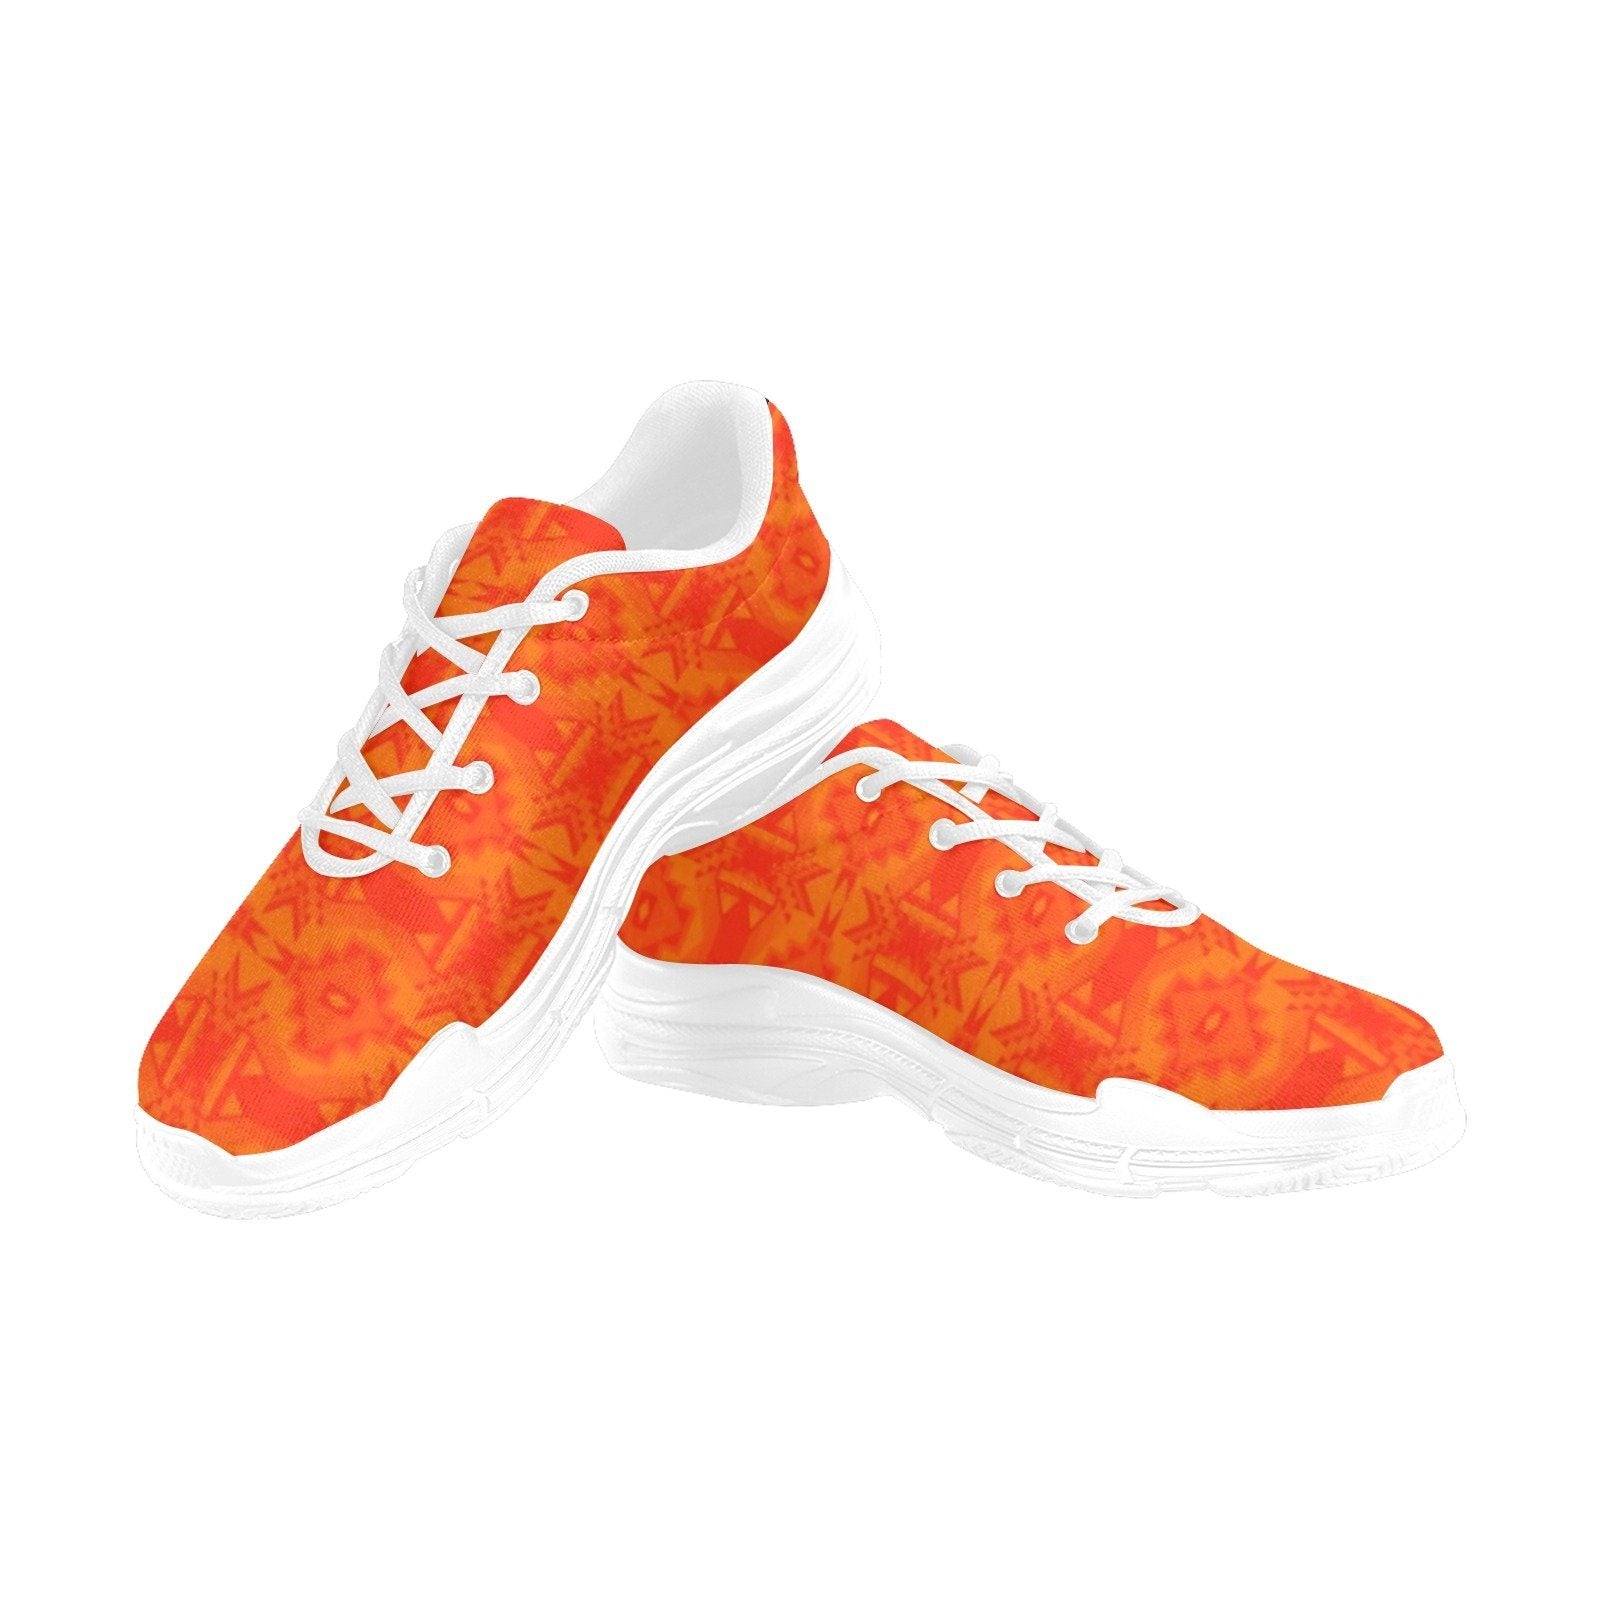 Fancy Orange Chunky Men's Running Shoes Artsadd US5 White Sole 